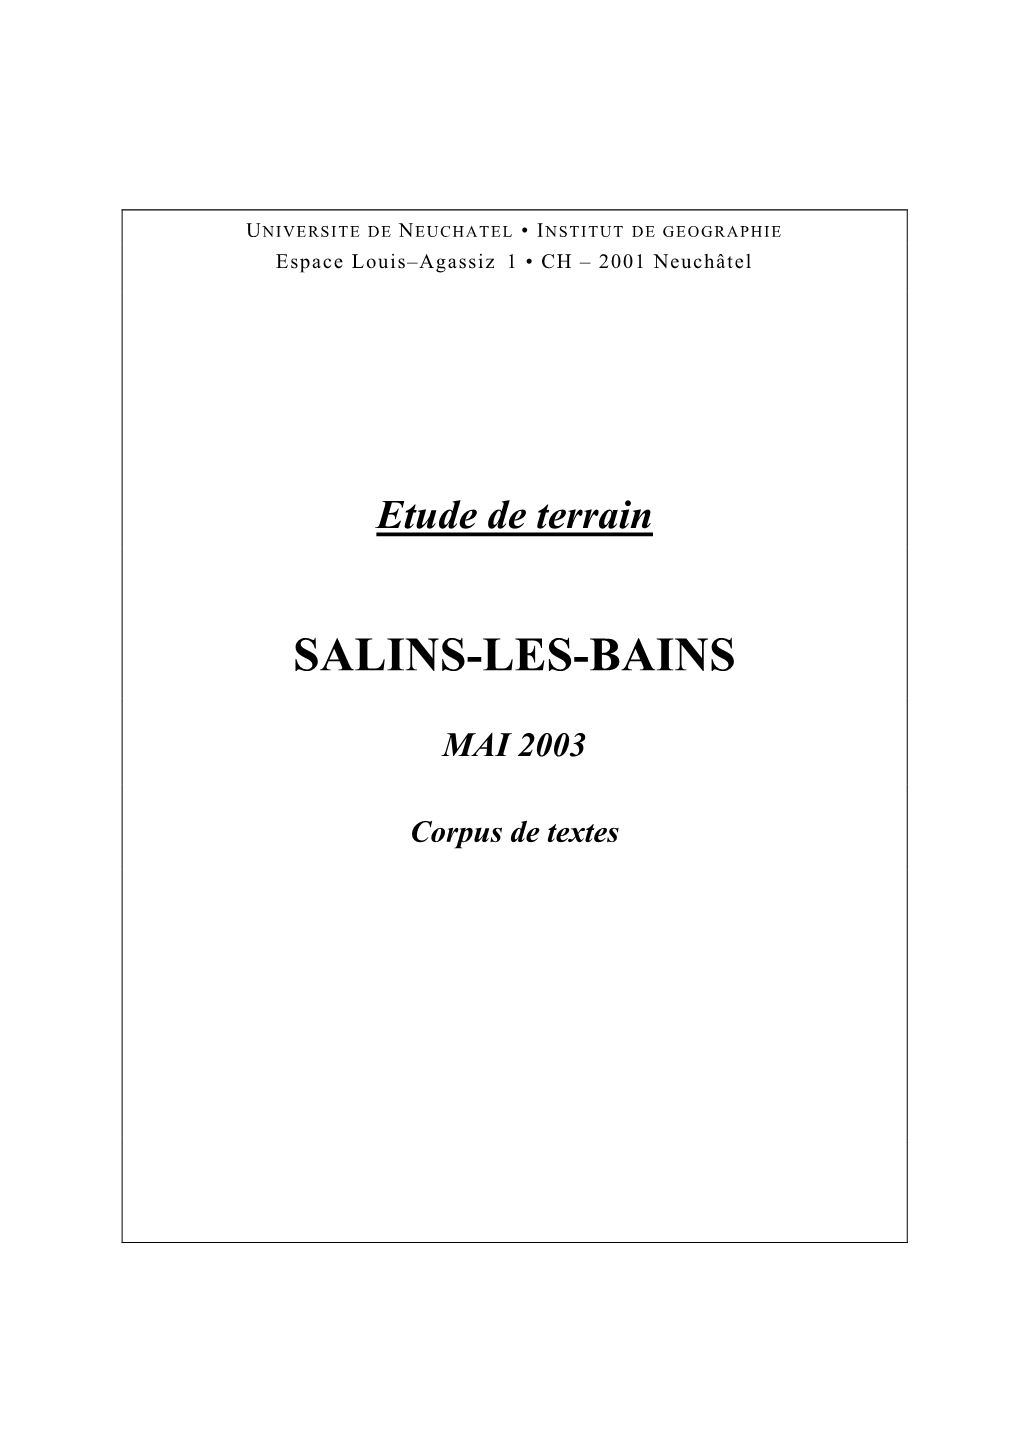 2003 Salins-Les-Bains